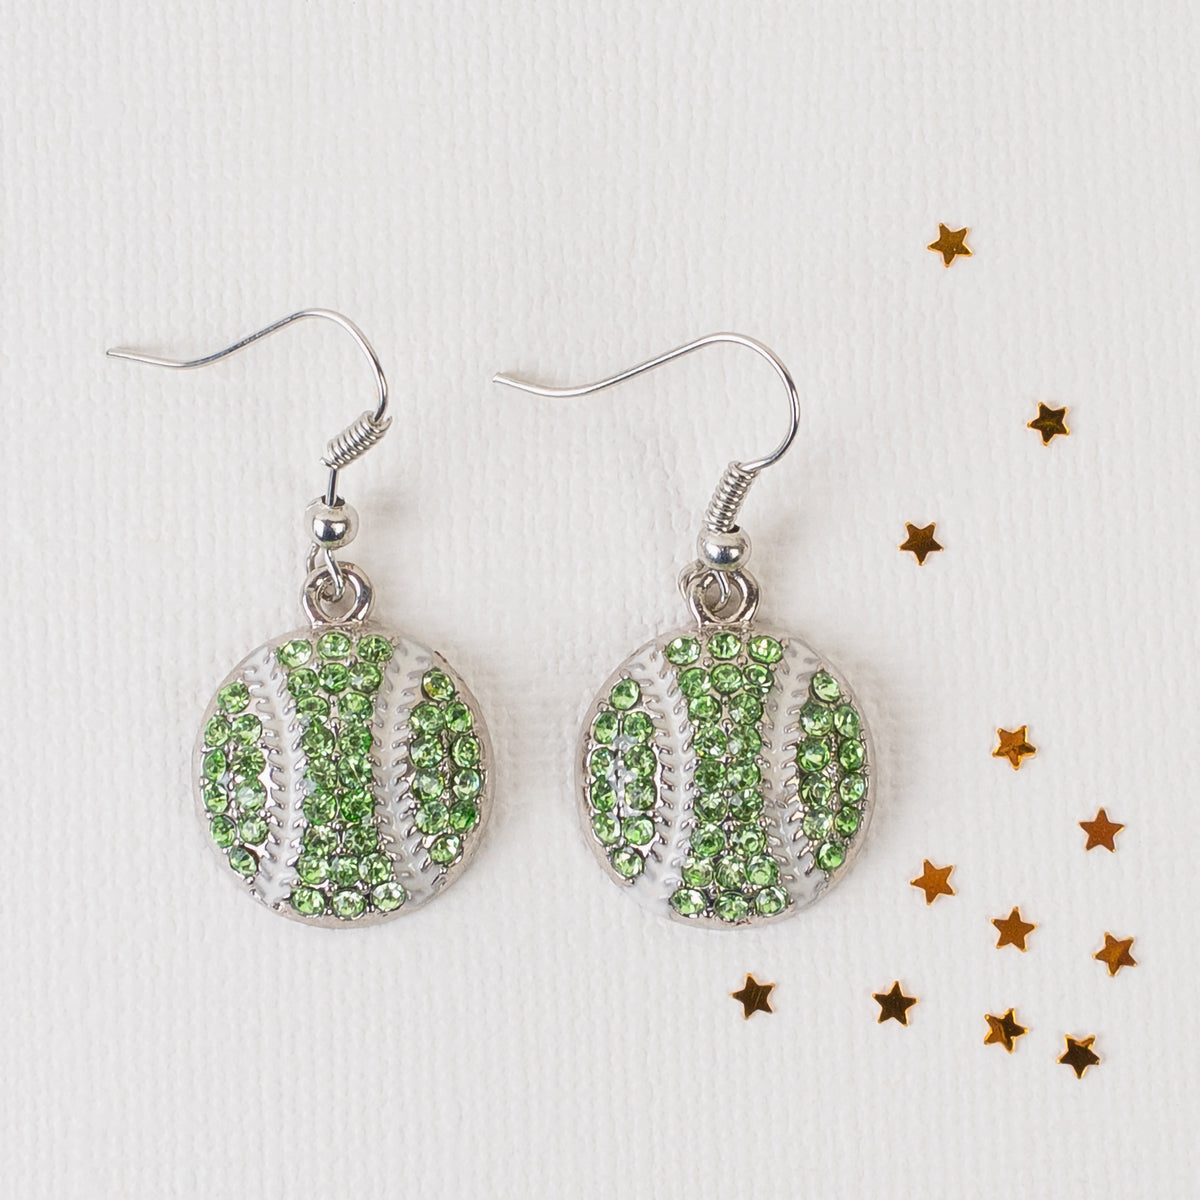 73032 - Softball Earrings - Lime Green - Fashion Jewelry Wholesale